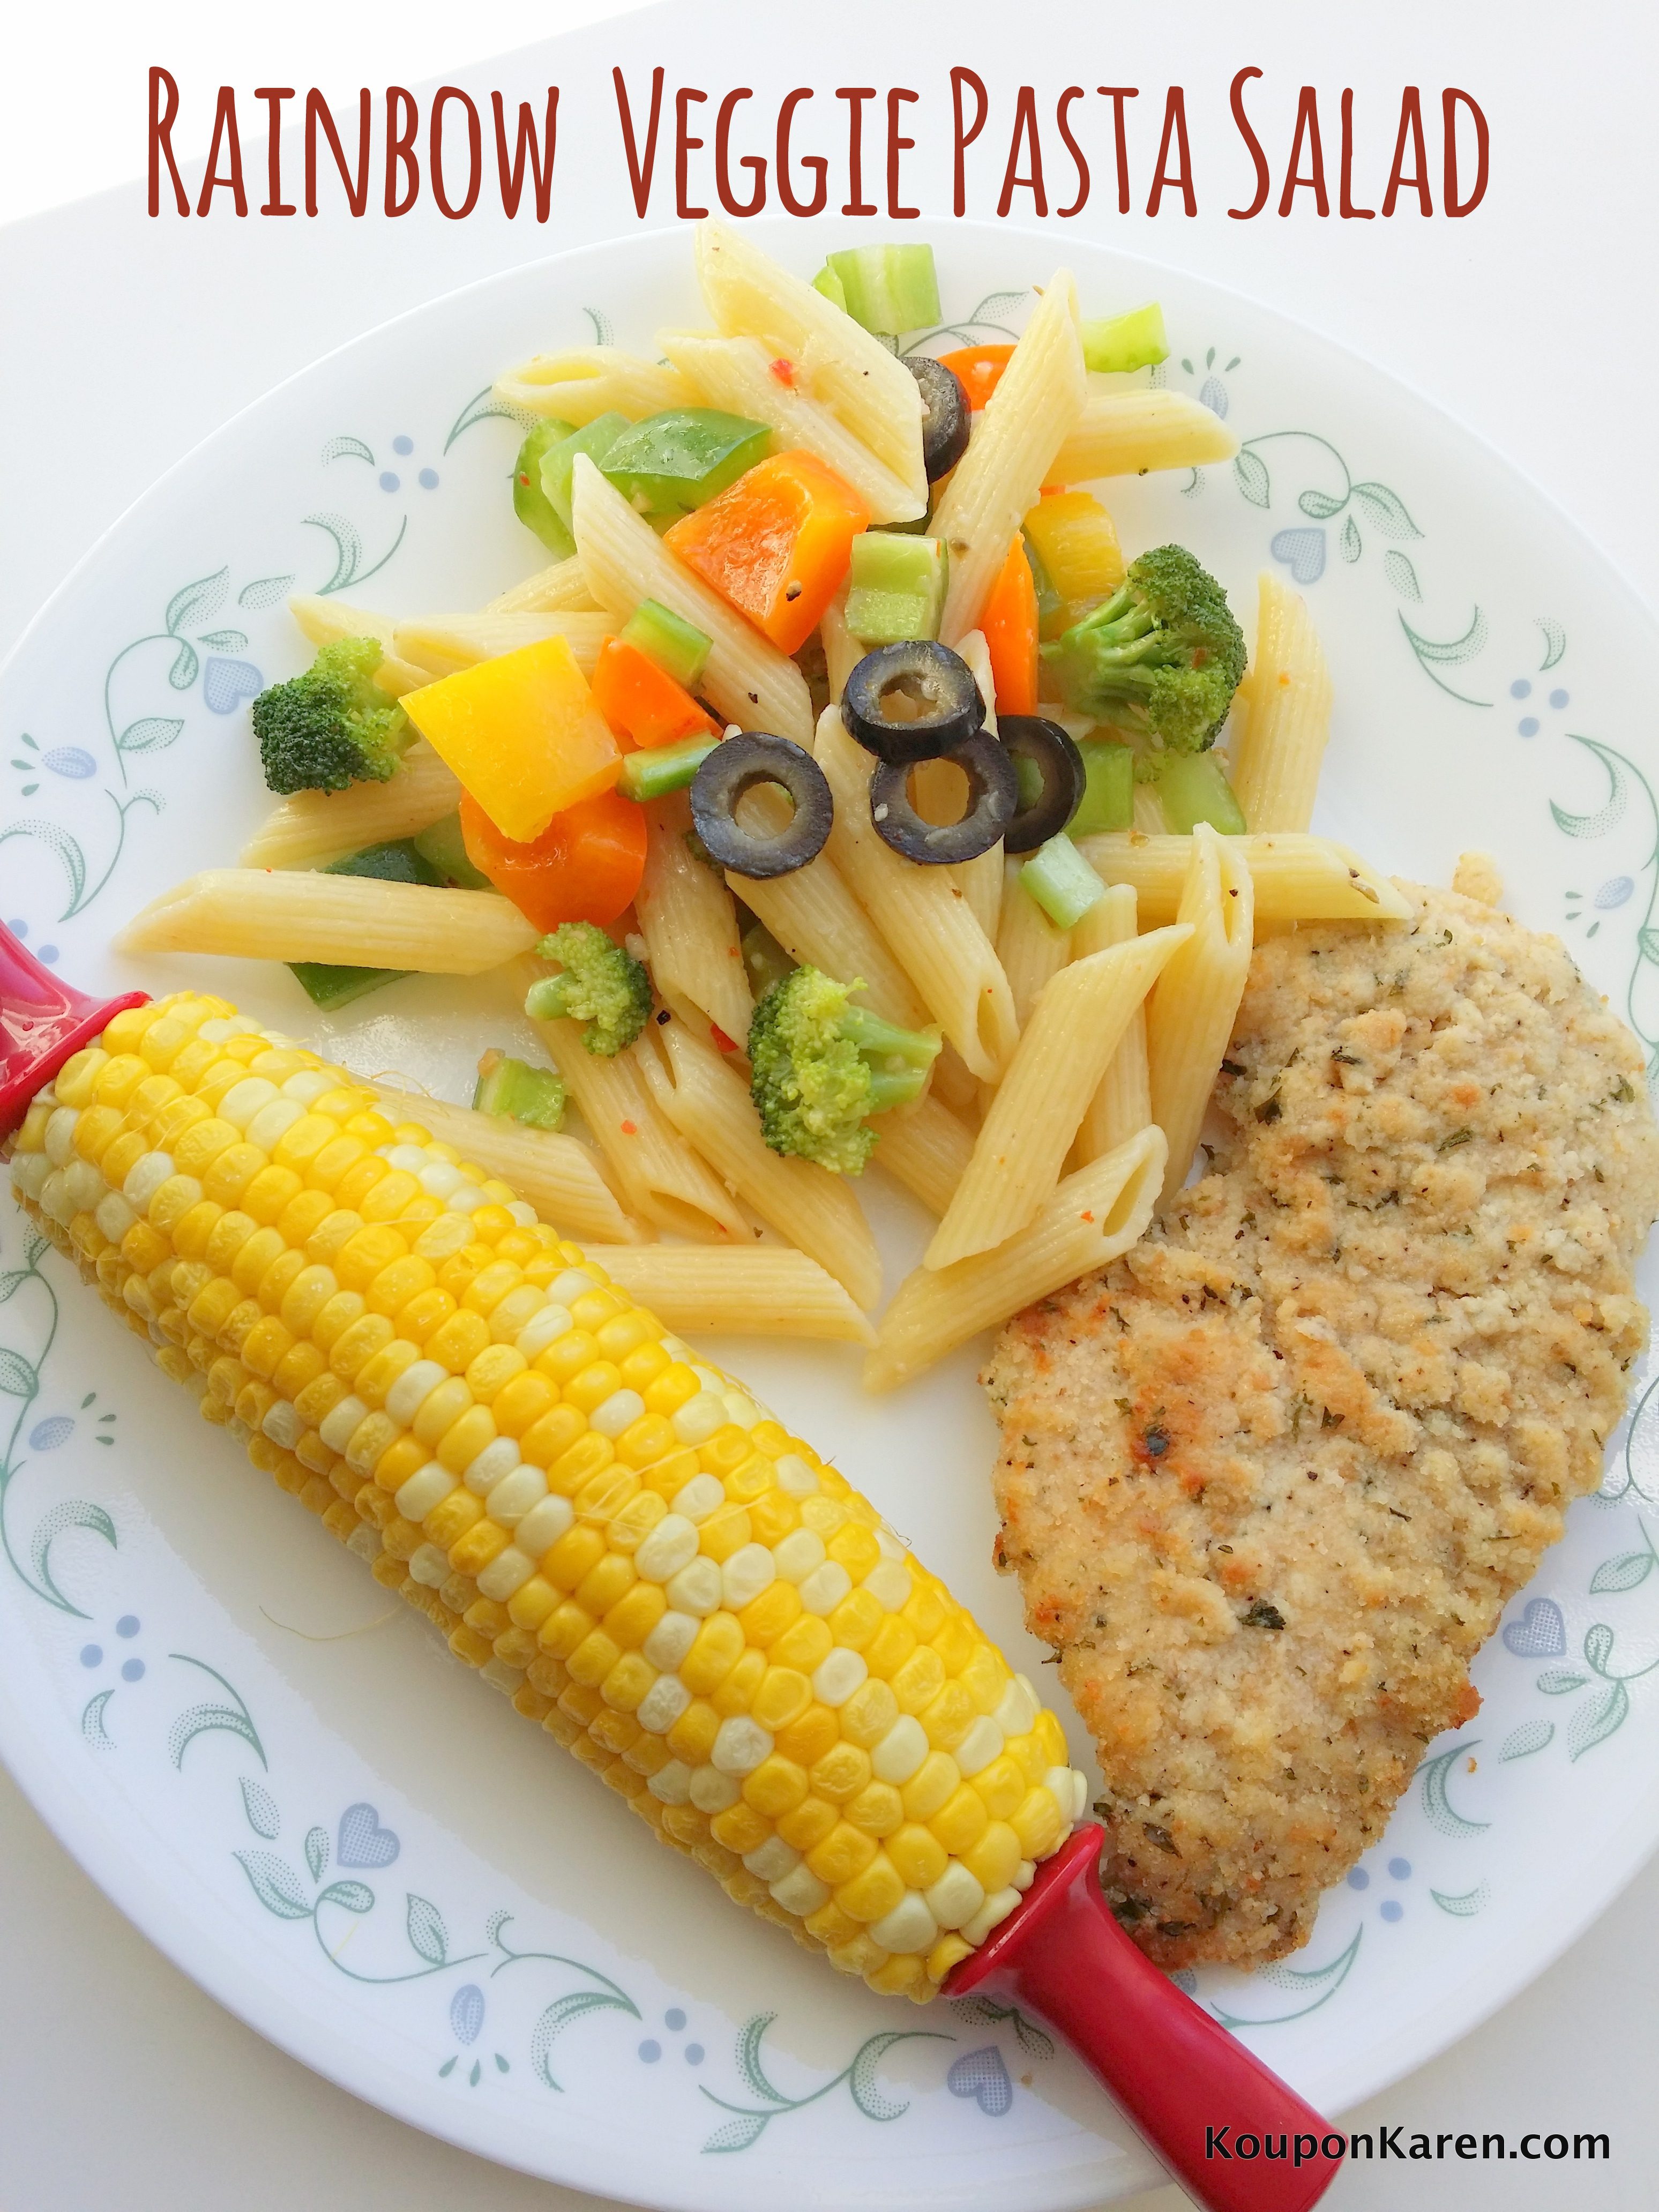 Rainbow Veggie Pasta Salad Side Dish and My Ideal Kitchen Draw #GoodCookcom or #KitchenDrawerContest